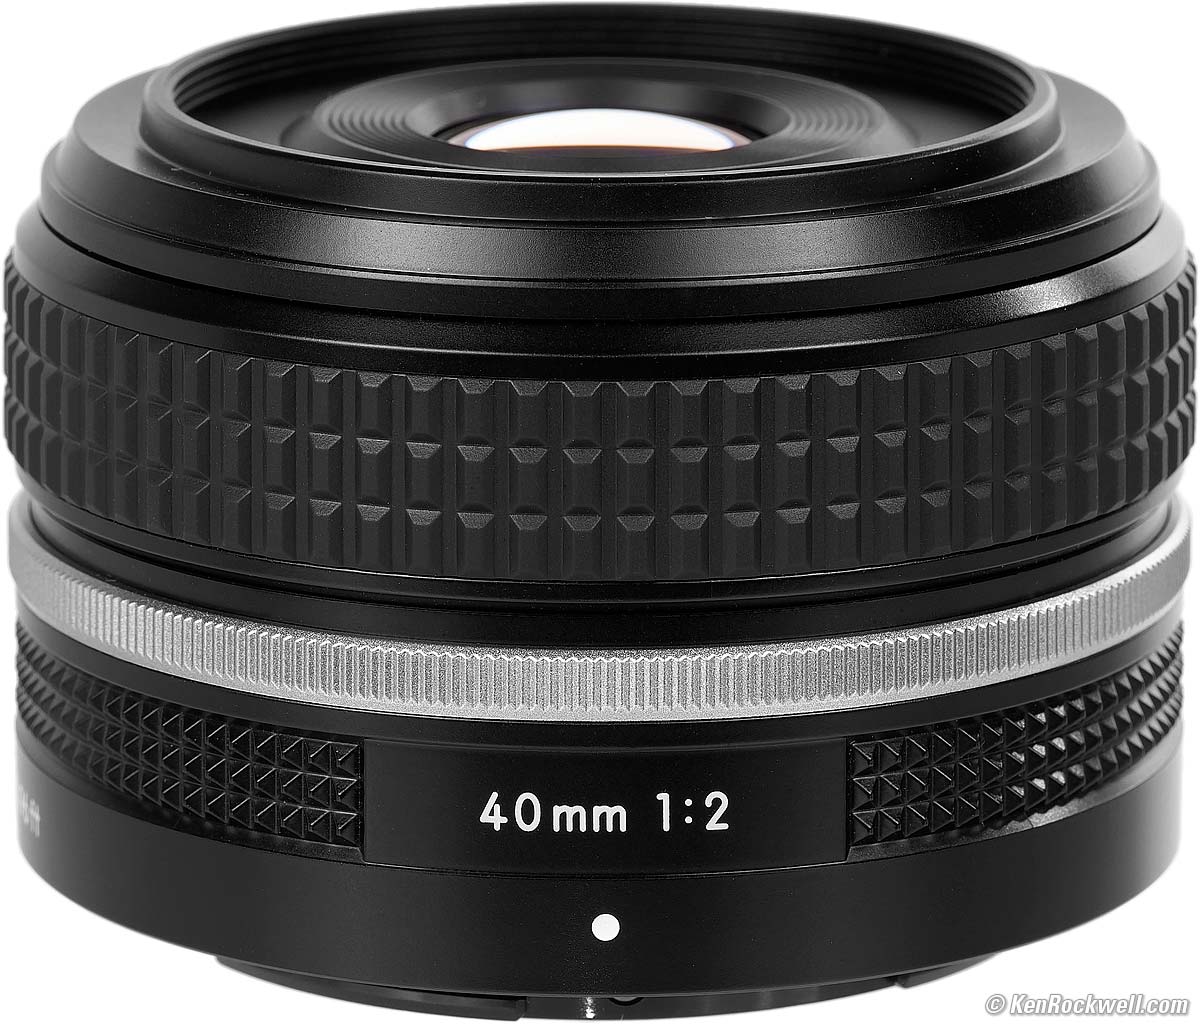 Nikon Z 40mm f/2 SE Review & Sample Images by Ken Rockwell